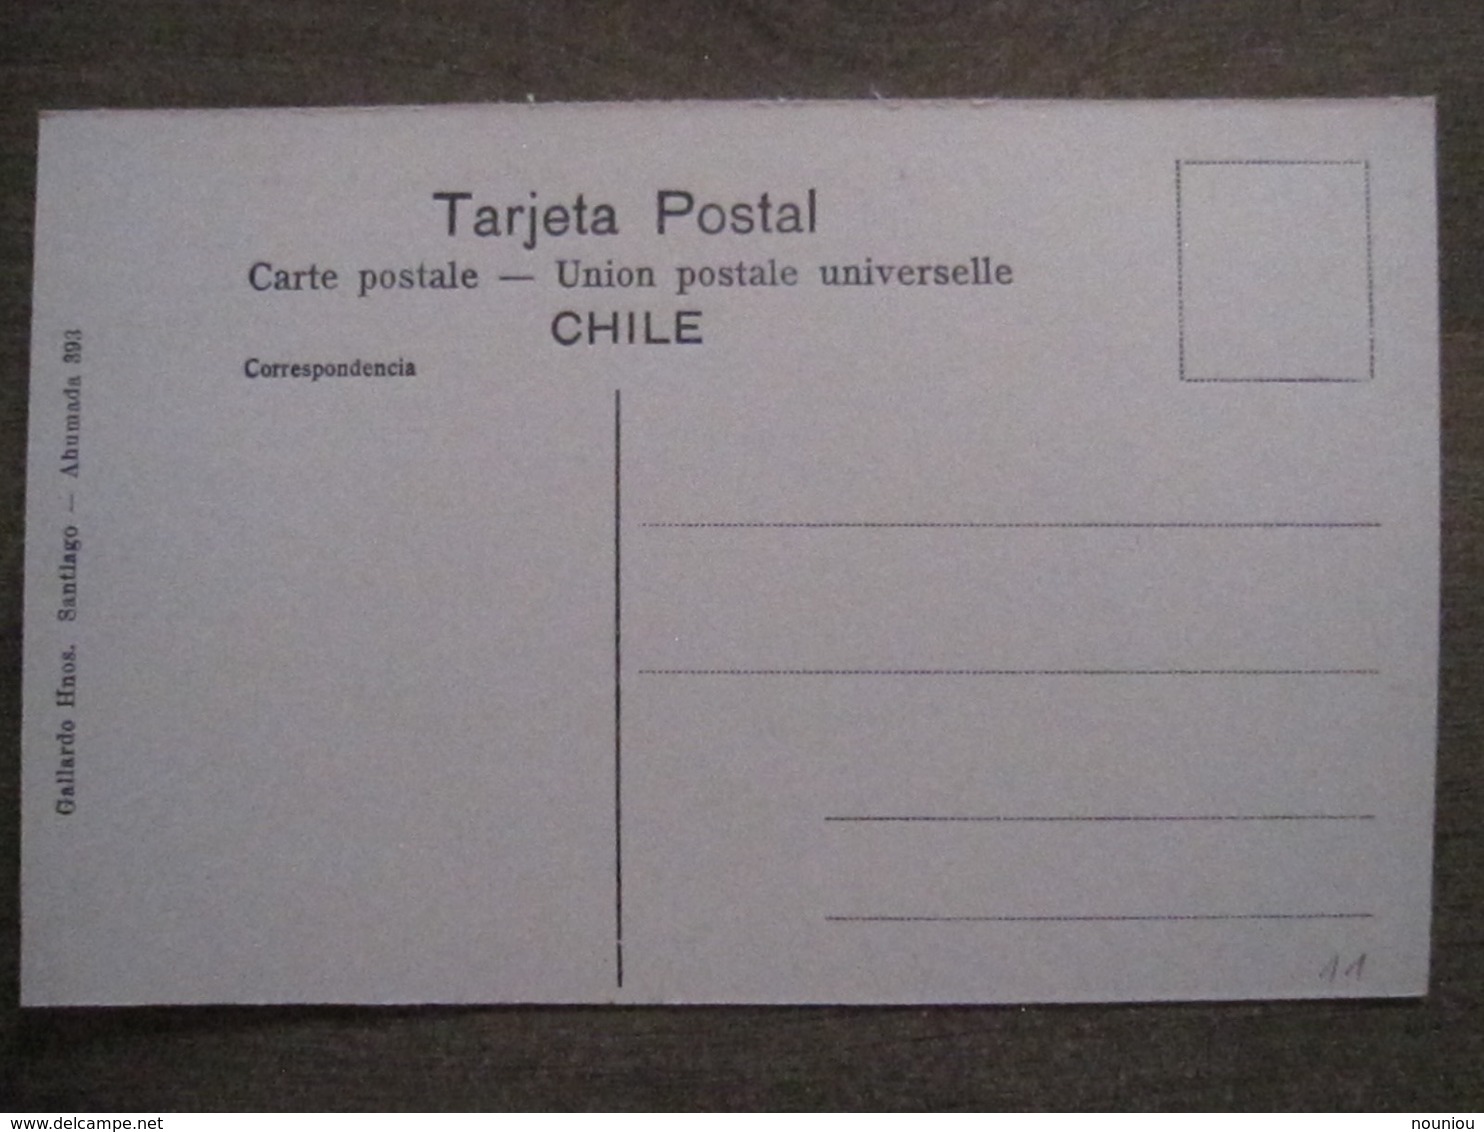 Tarjeta Postal - Chile Chili - Santiago - Calle Ahumada Desde Huerfanos - Hnos Ahumada 393 No. 109 - Foto Leon - Chile